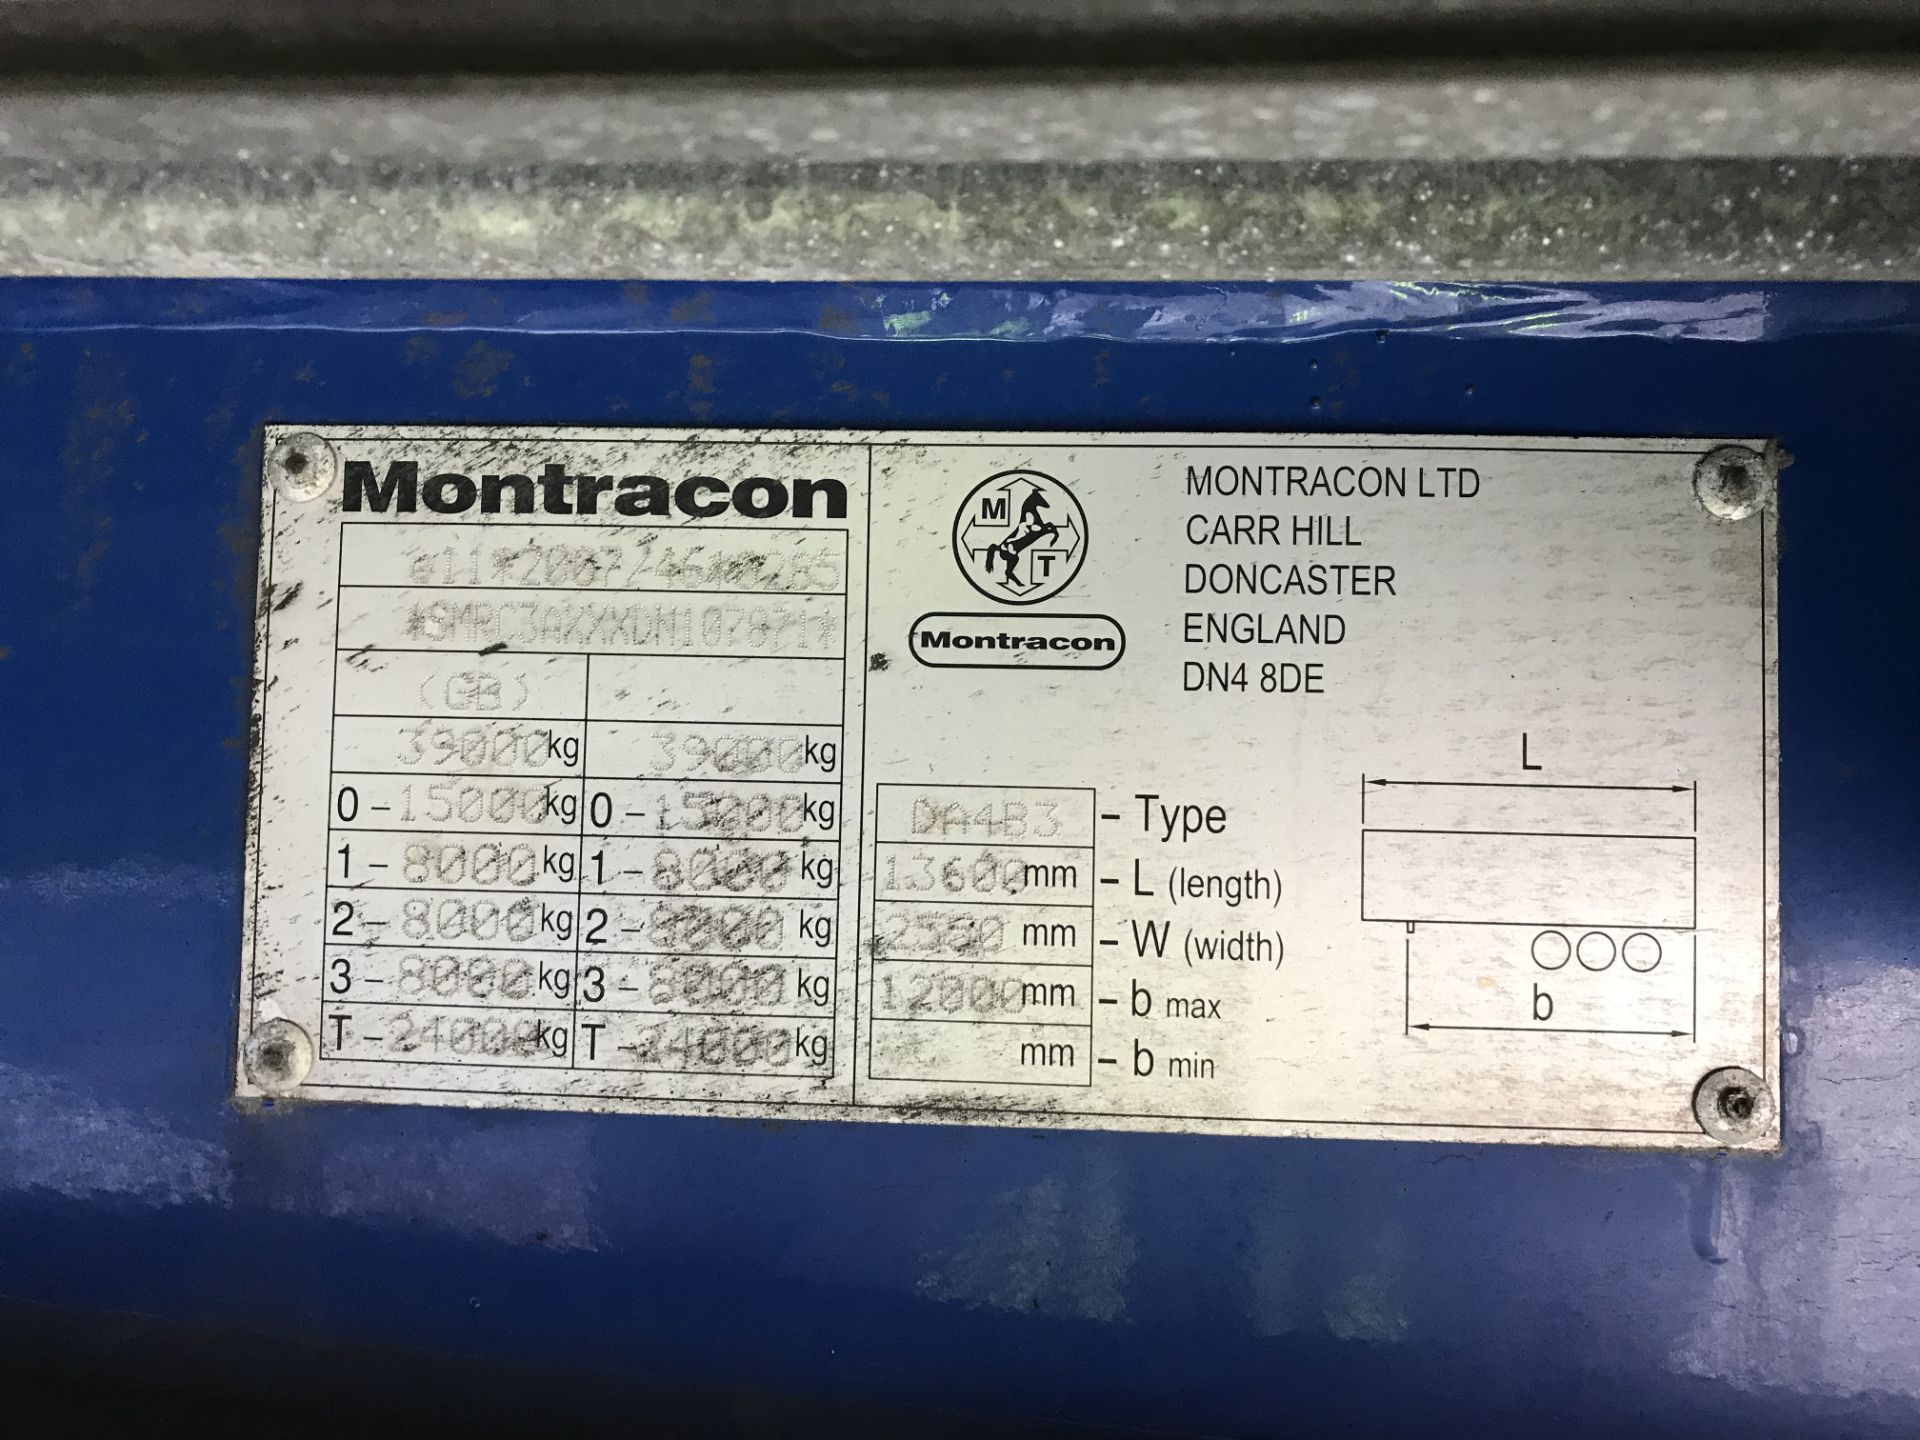 Montracon 13.6m Tri-Axle Curtainside Single Deck Semi-Trailer, chassis no. SMRC3AXXXDN107871, ID no. - Image 6 of 6